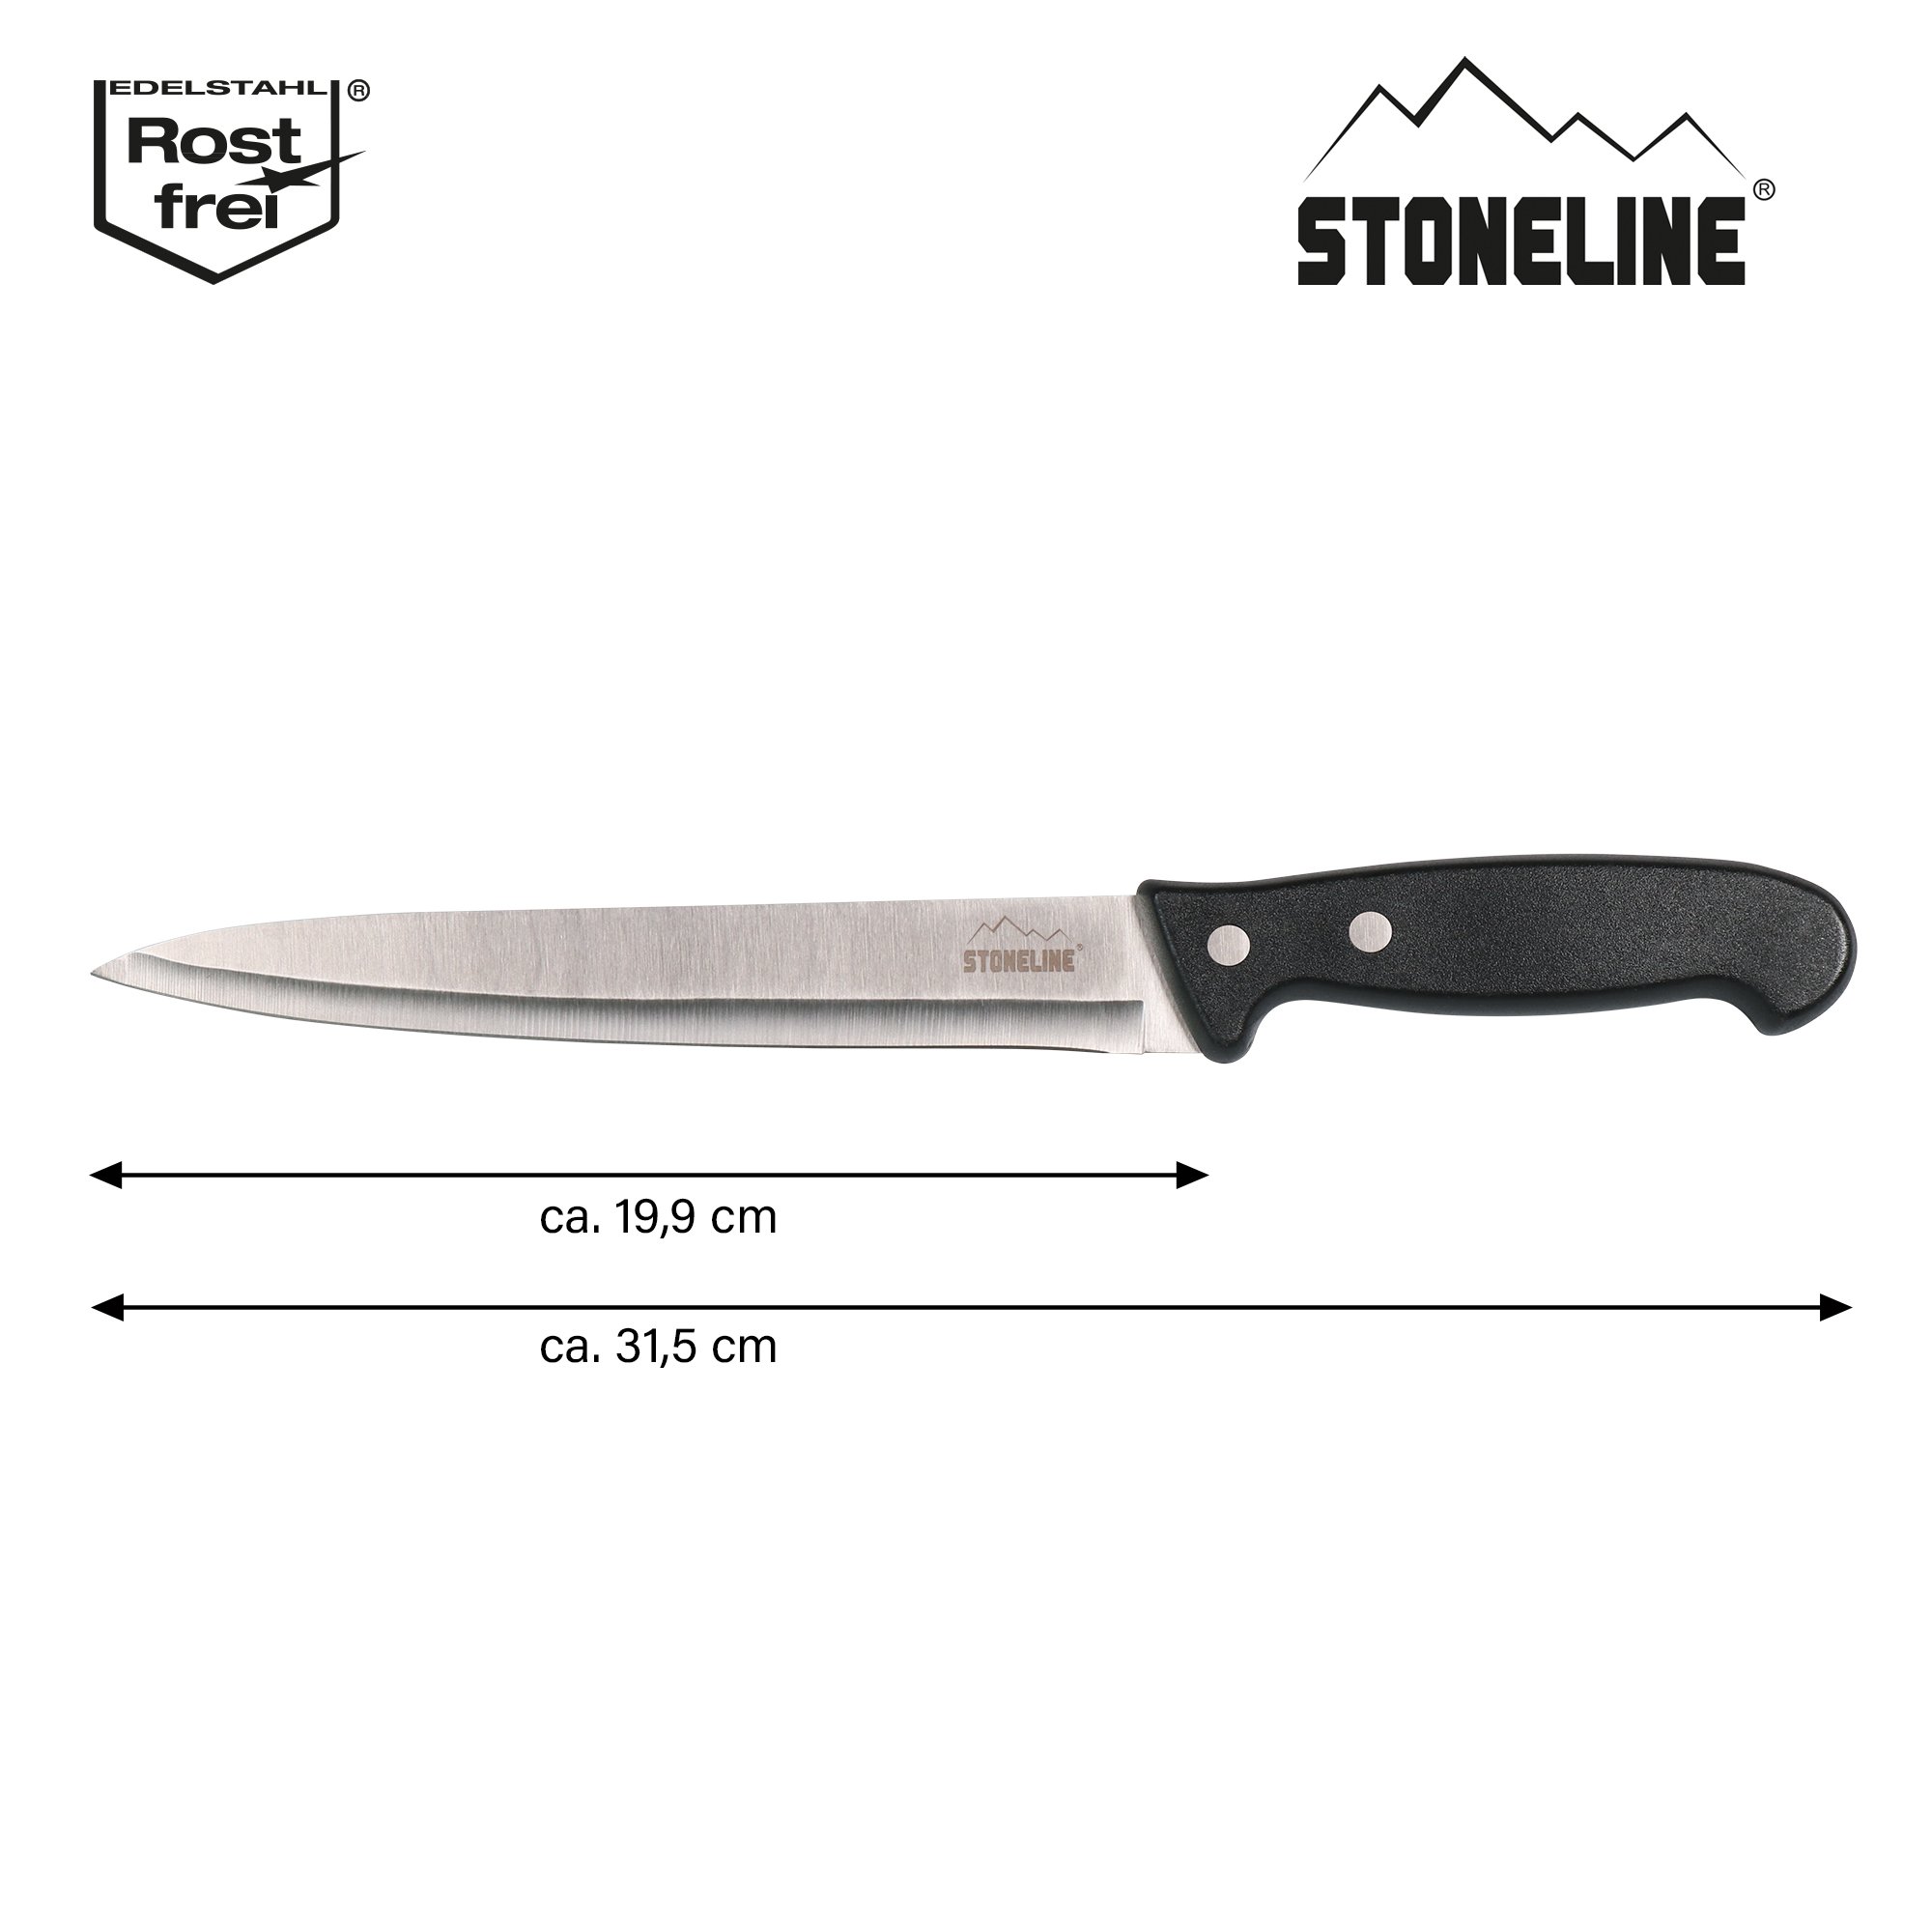 STONELINE® Stainless Steel Knife 31.5 cm Butcher Knife, Safety Sheath